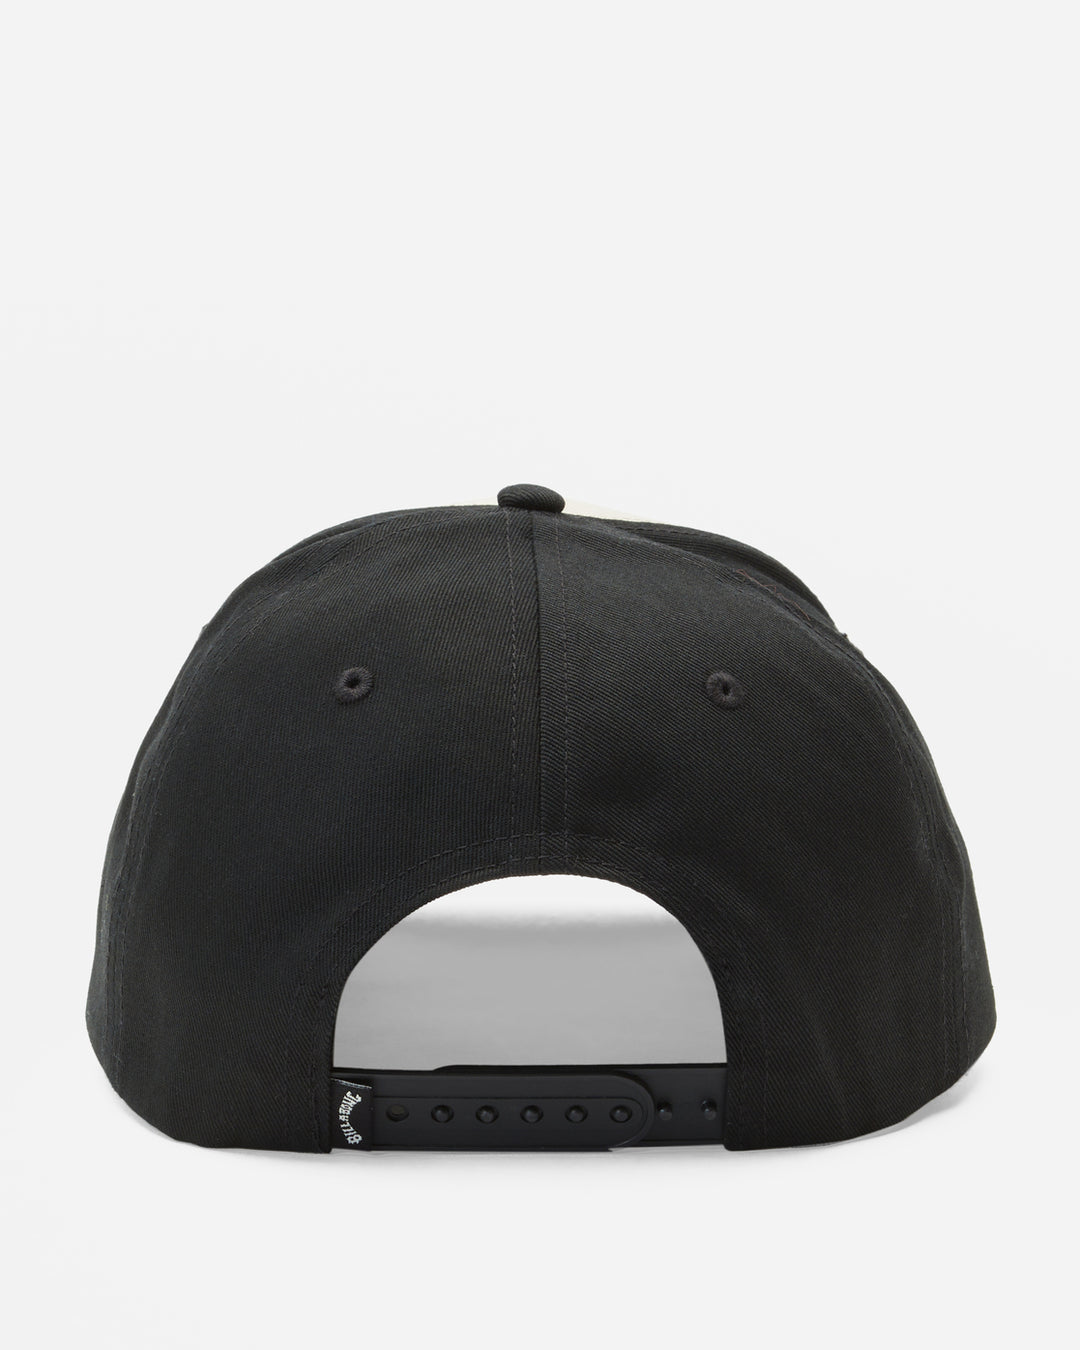 Billabong Walled Snapback Hat - Black/Tan - Sun Diego Boardshop